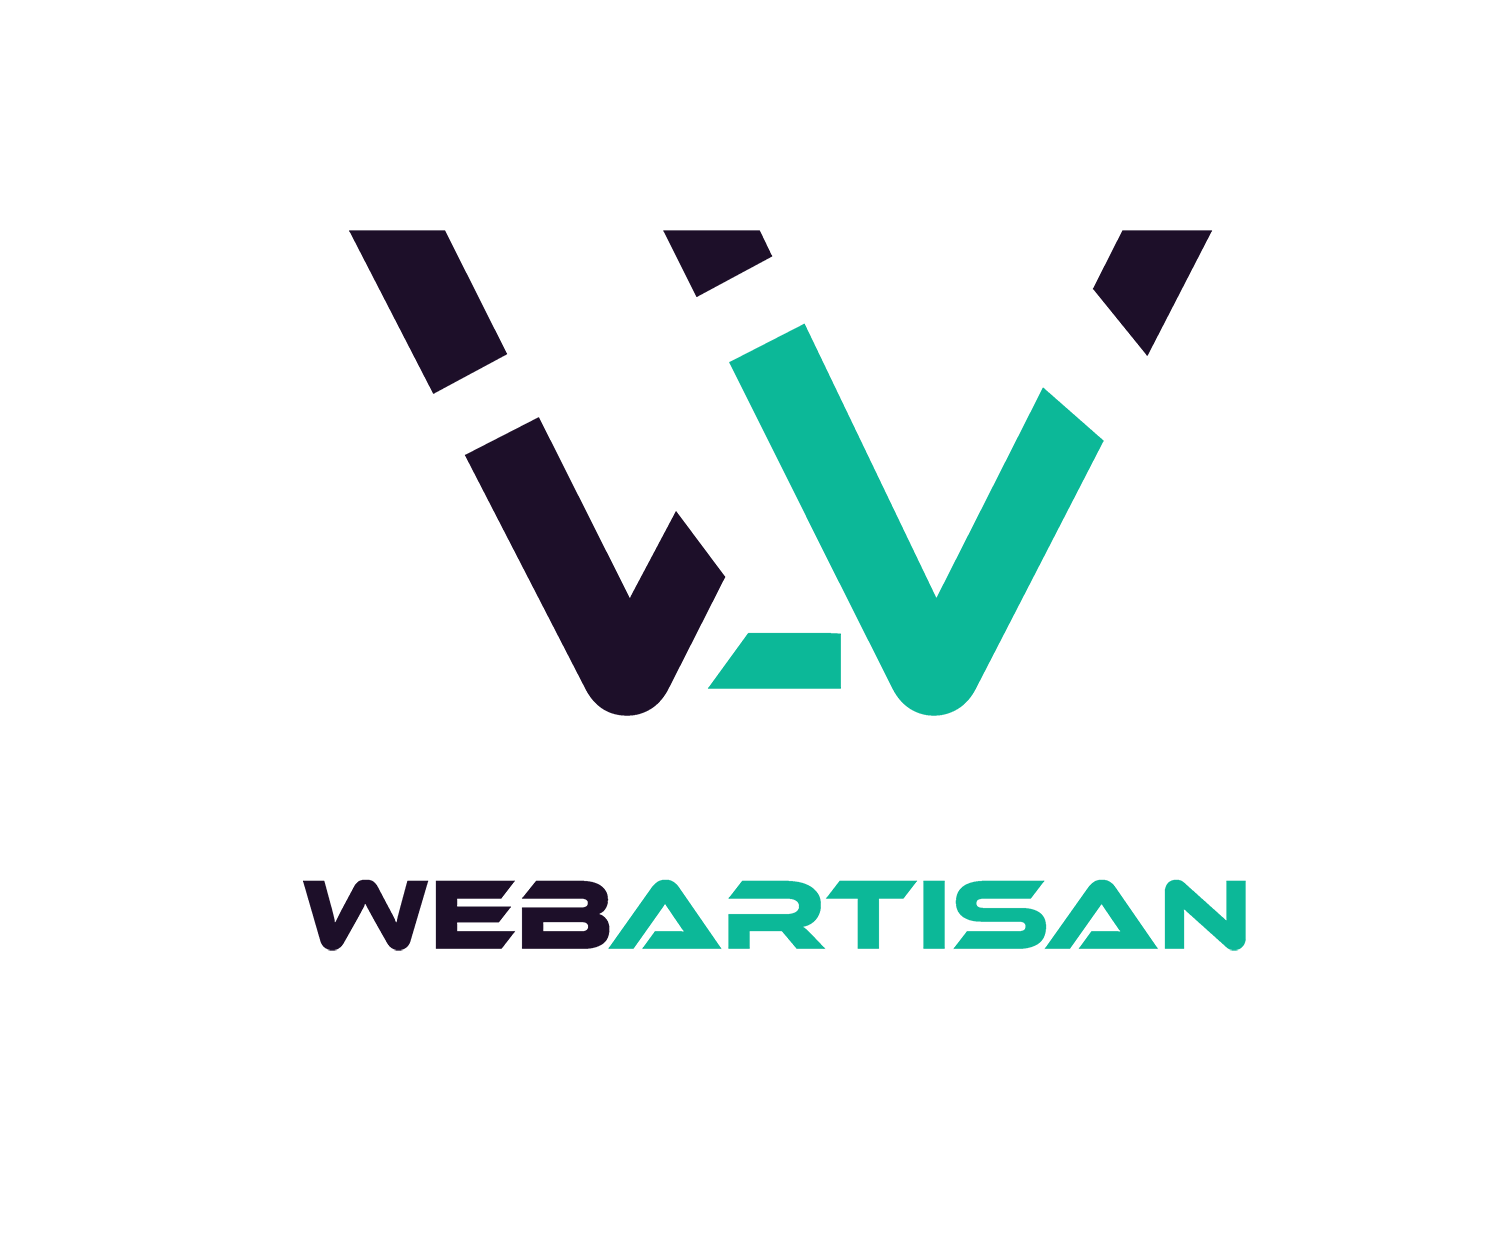 Unigraphics Logo - Modern, Professional, Digital Logo Design for WebArtisan